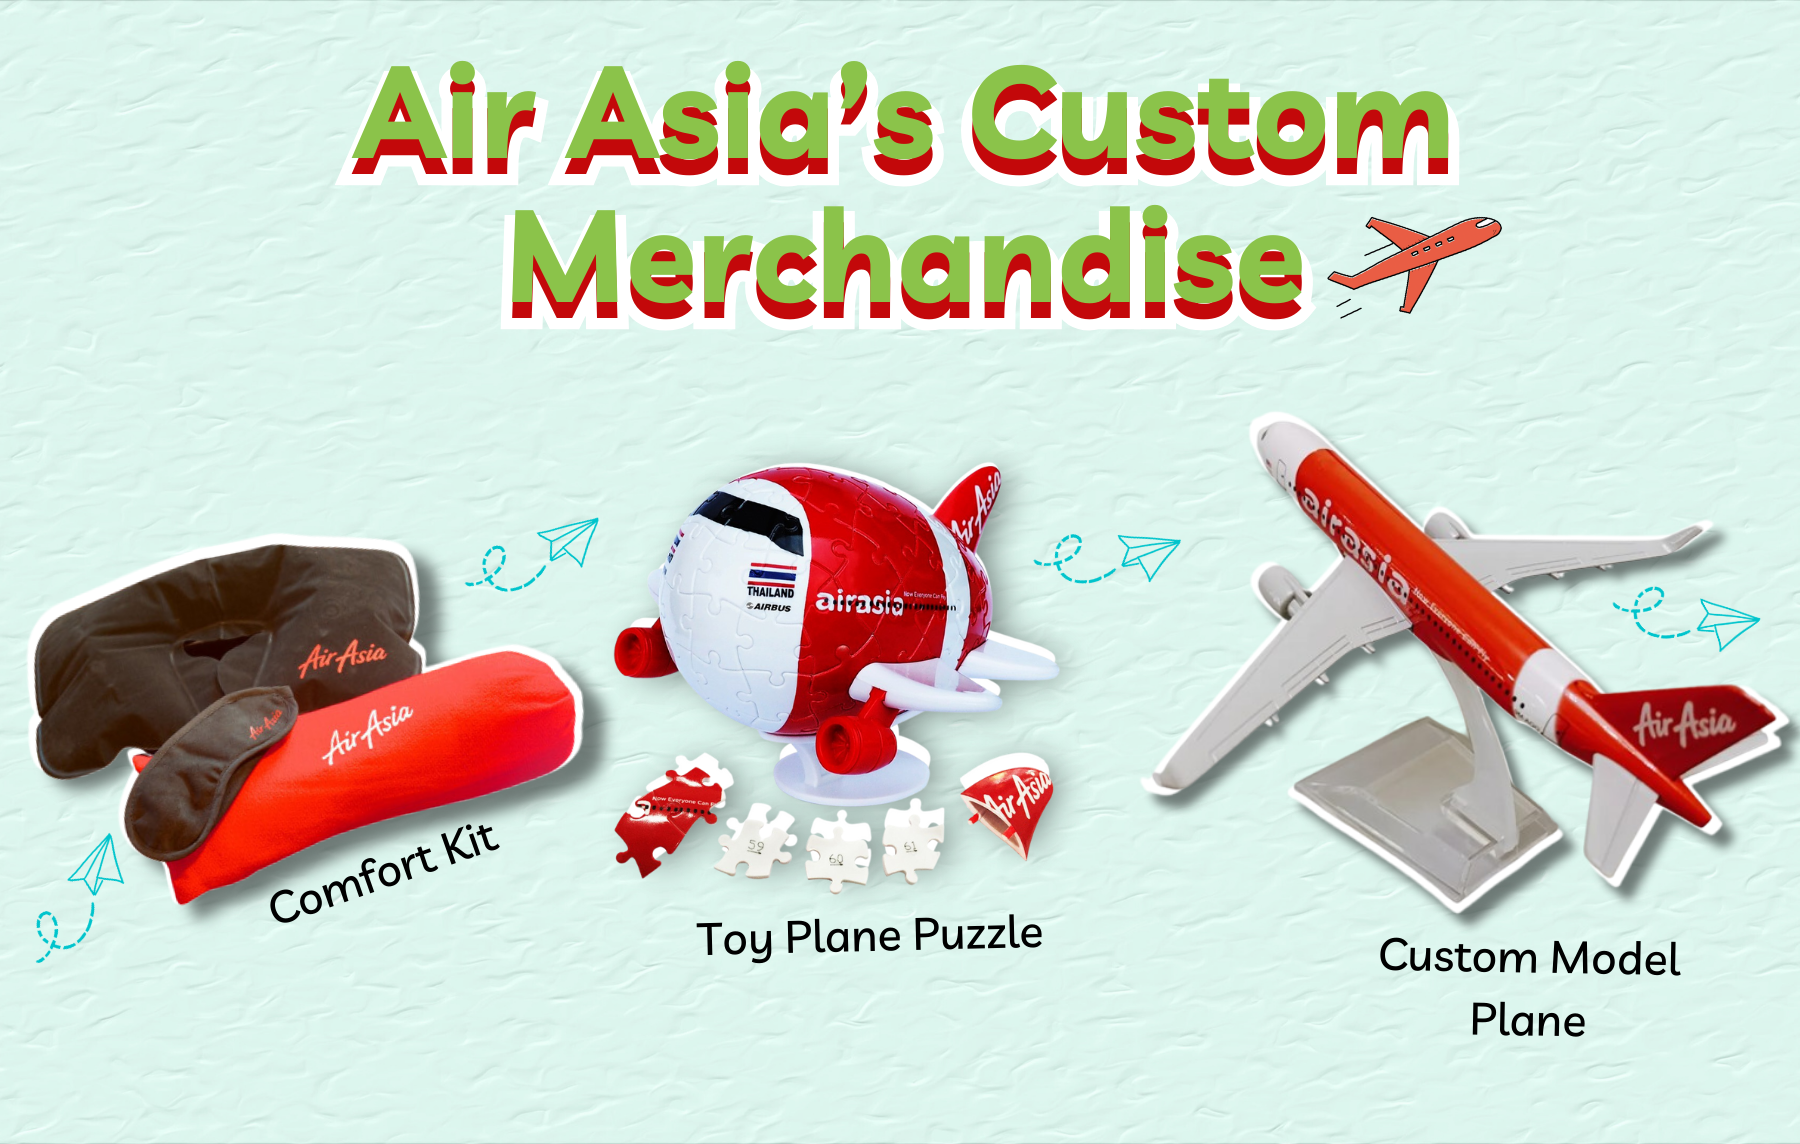 Air Asia airport marketing merchandise